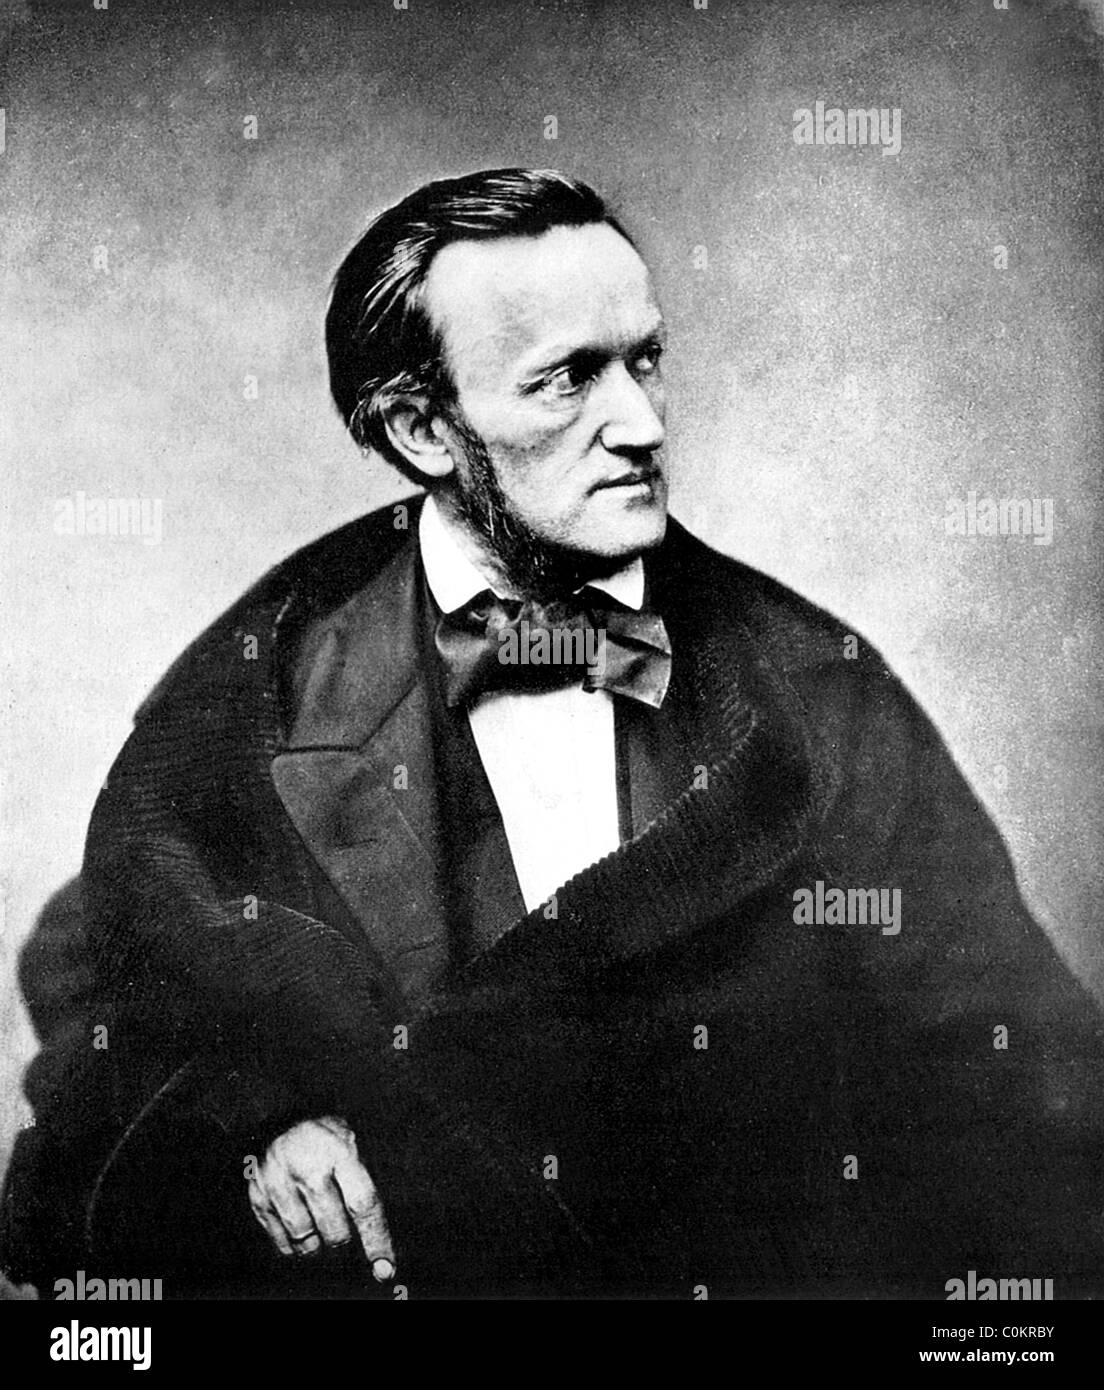 Richard Wagner, compositeur allemand Banque D'Images